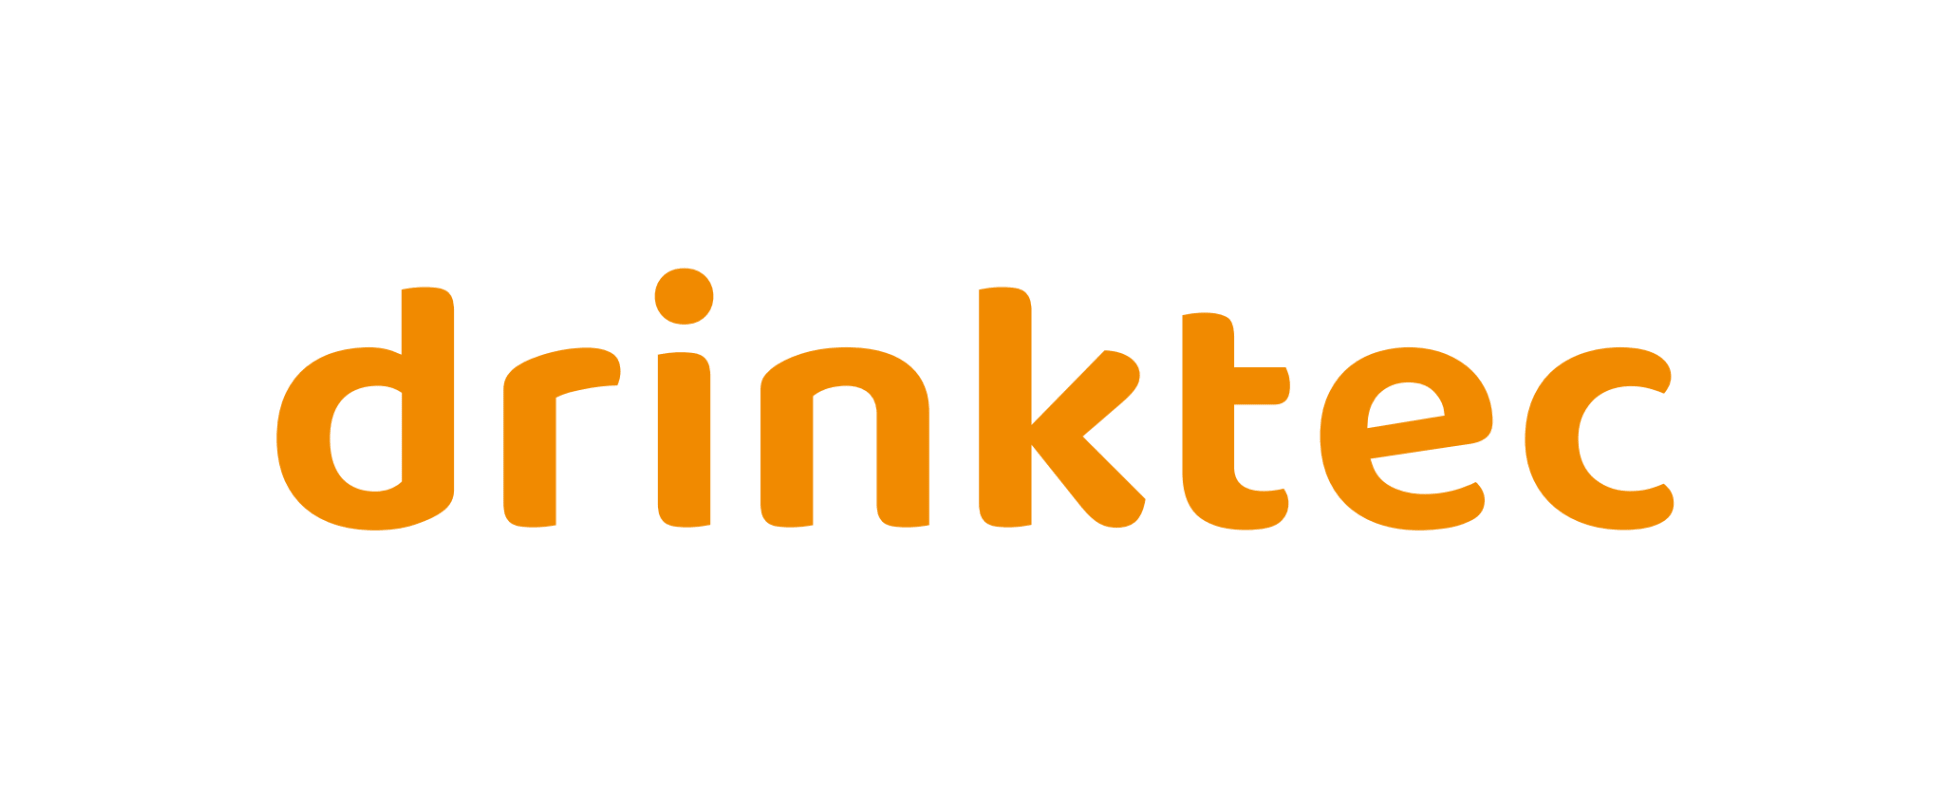 drinktec logo